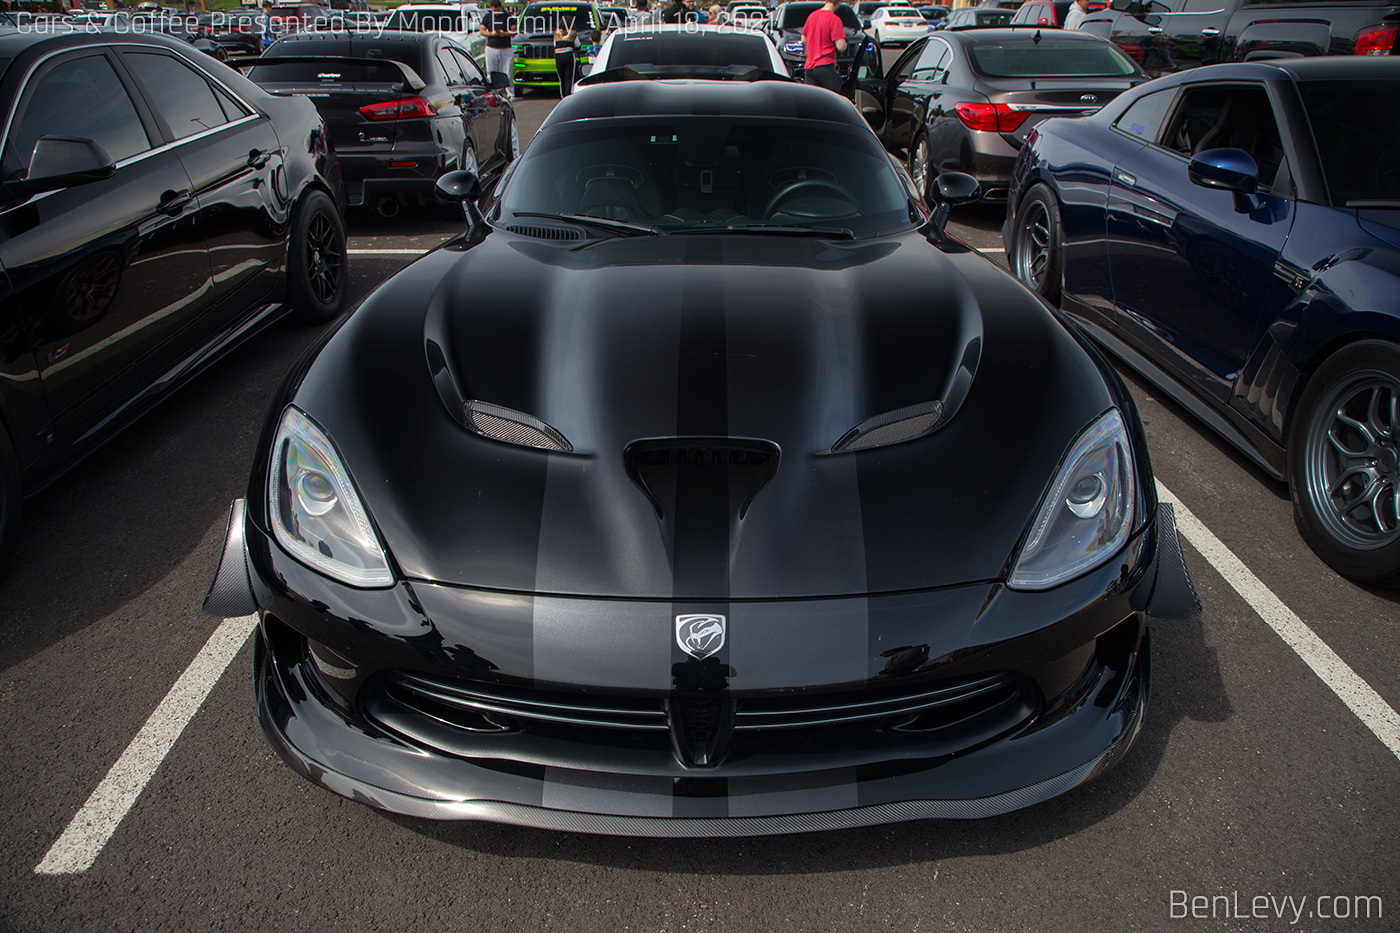 Striped Hood of a Black Dodge Viper